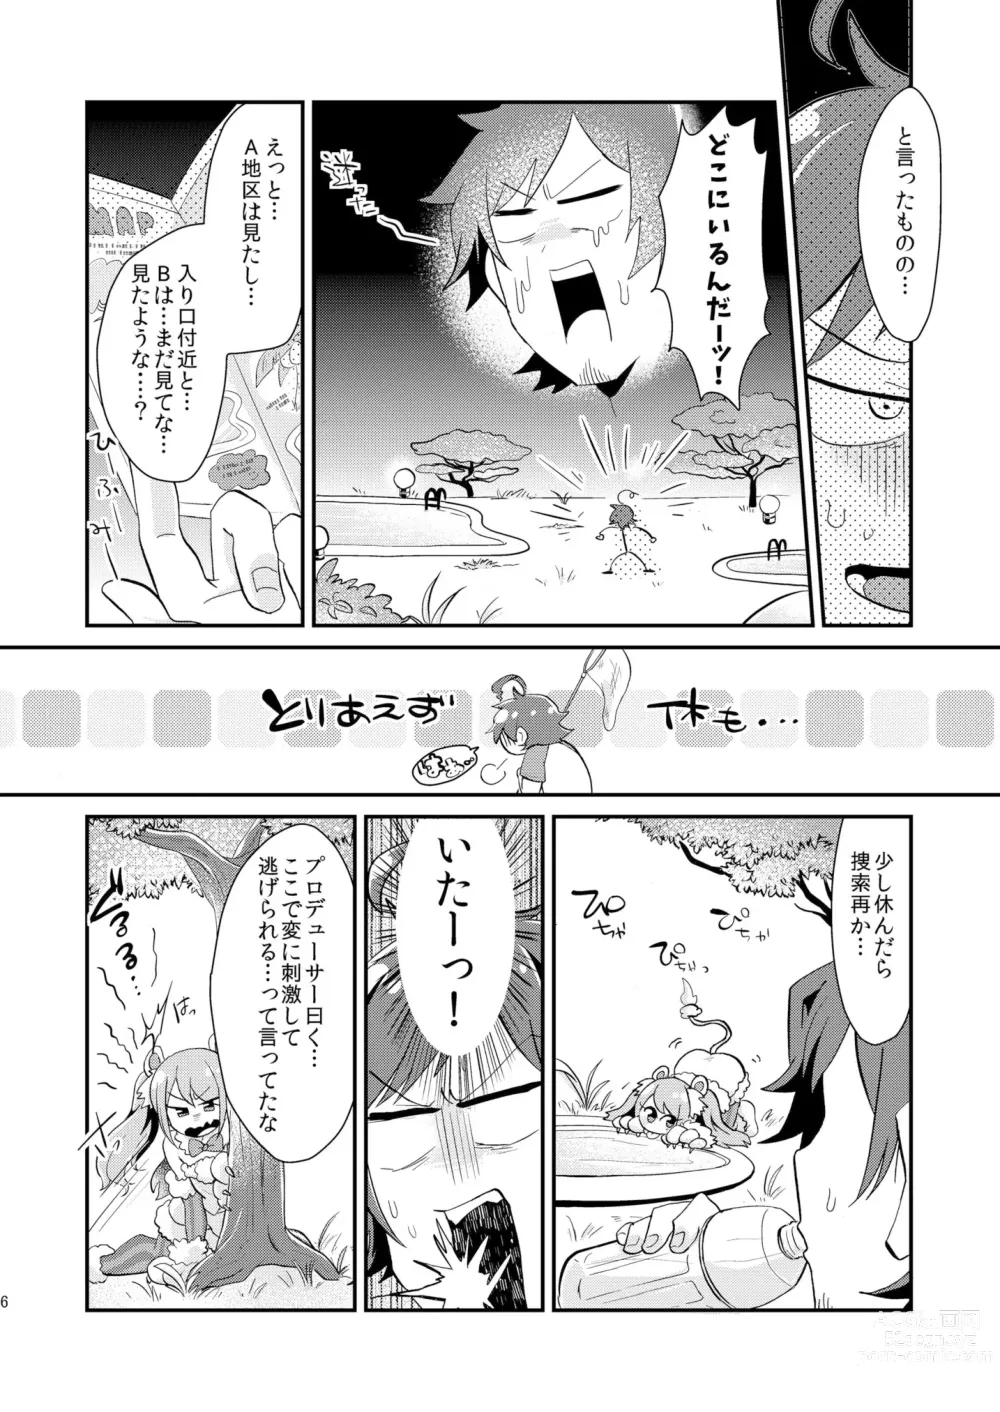 Page 5 of doujinshi Yasei Bakuhatsu